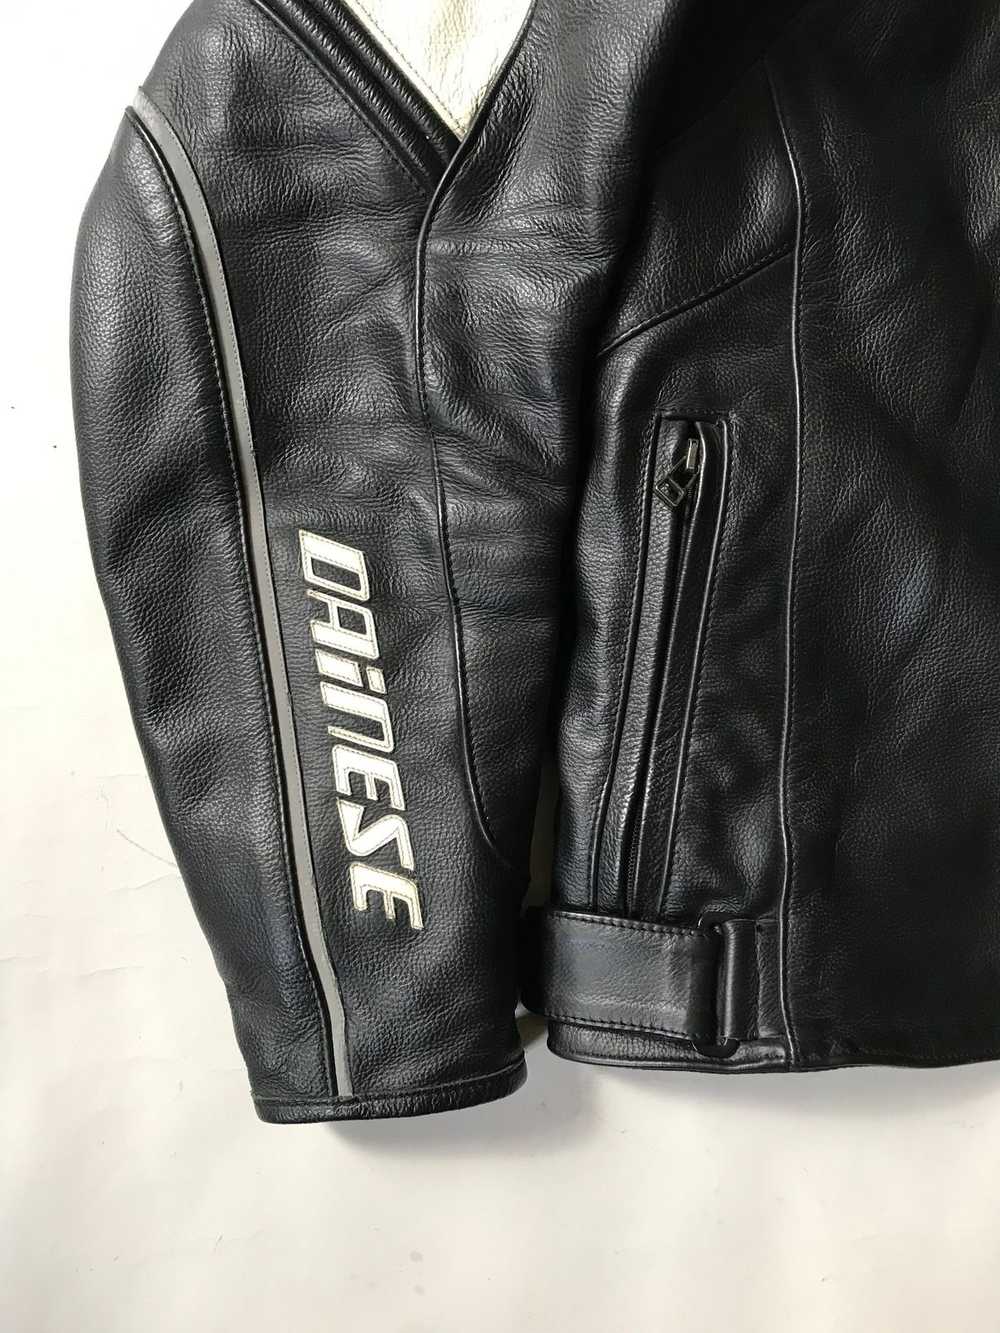 Dainese Dainese Two Tone Leather Motorcycle Jacket - image 12